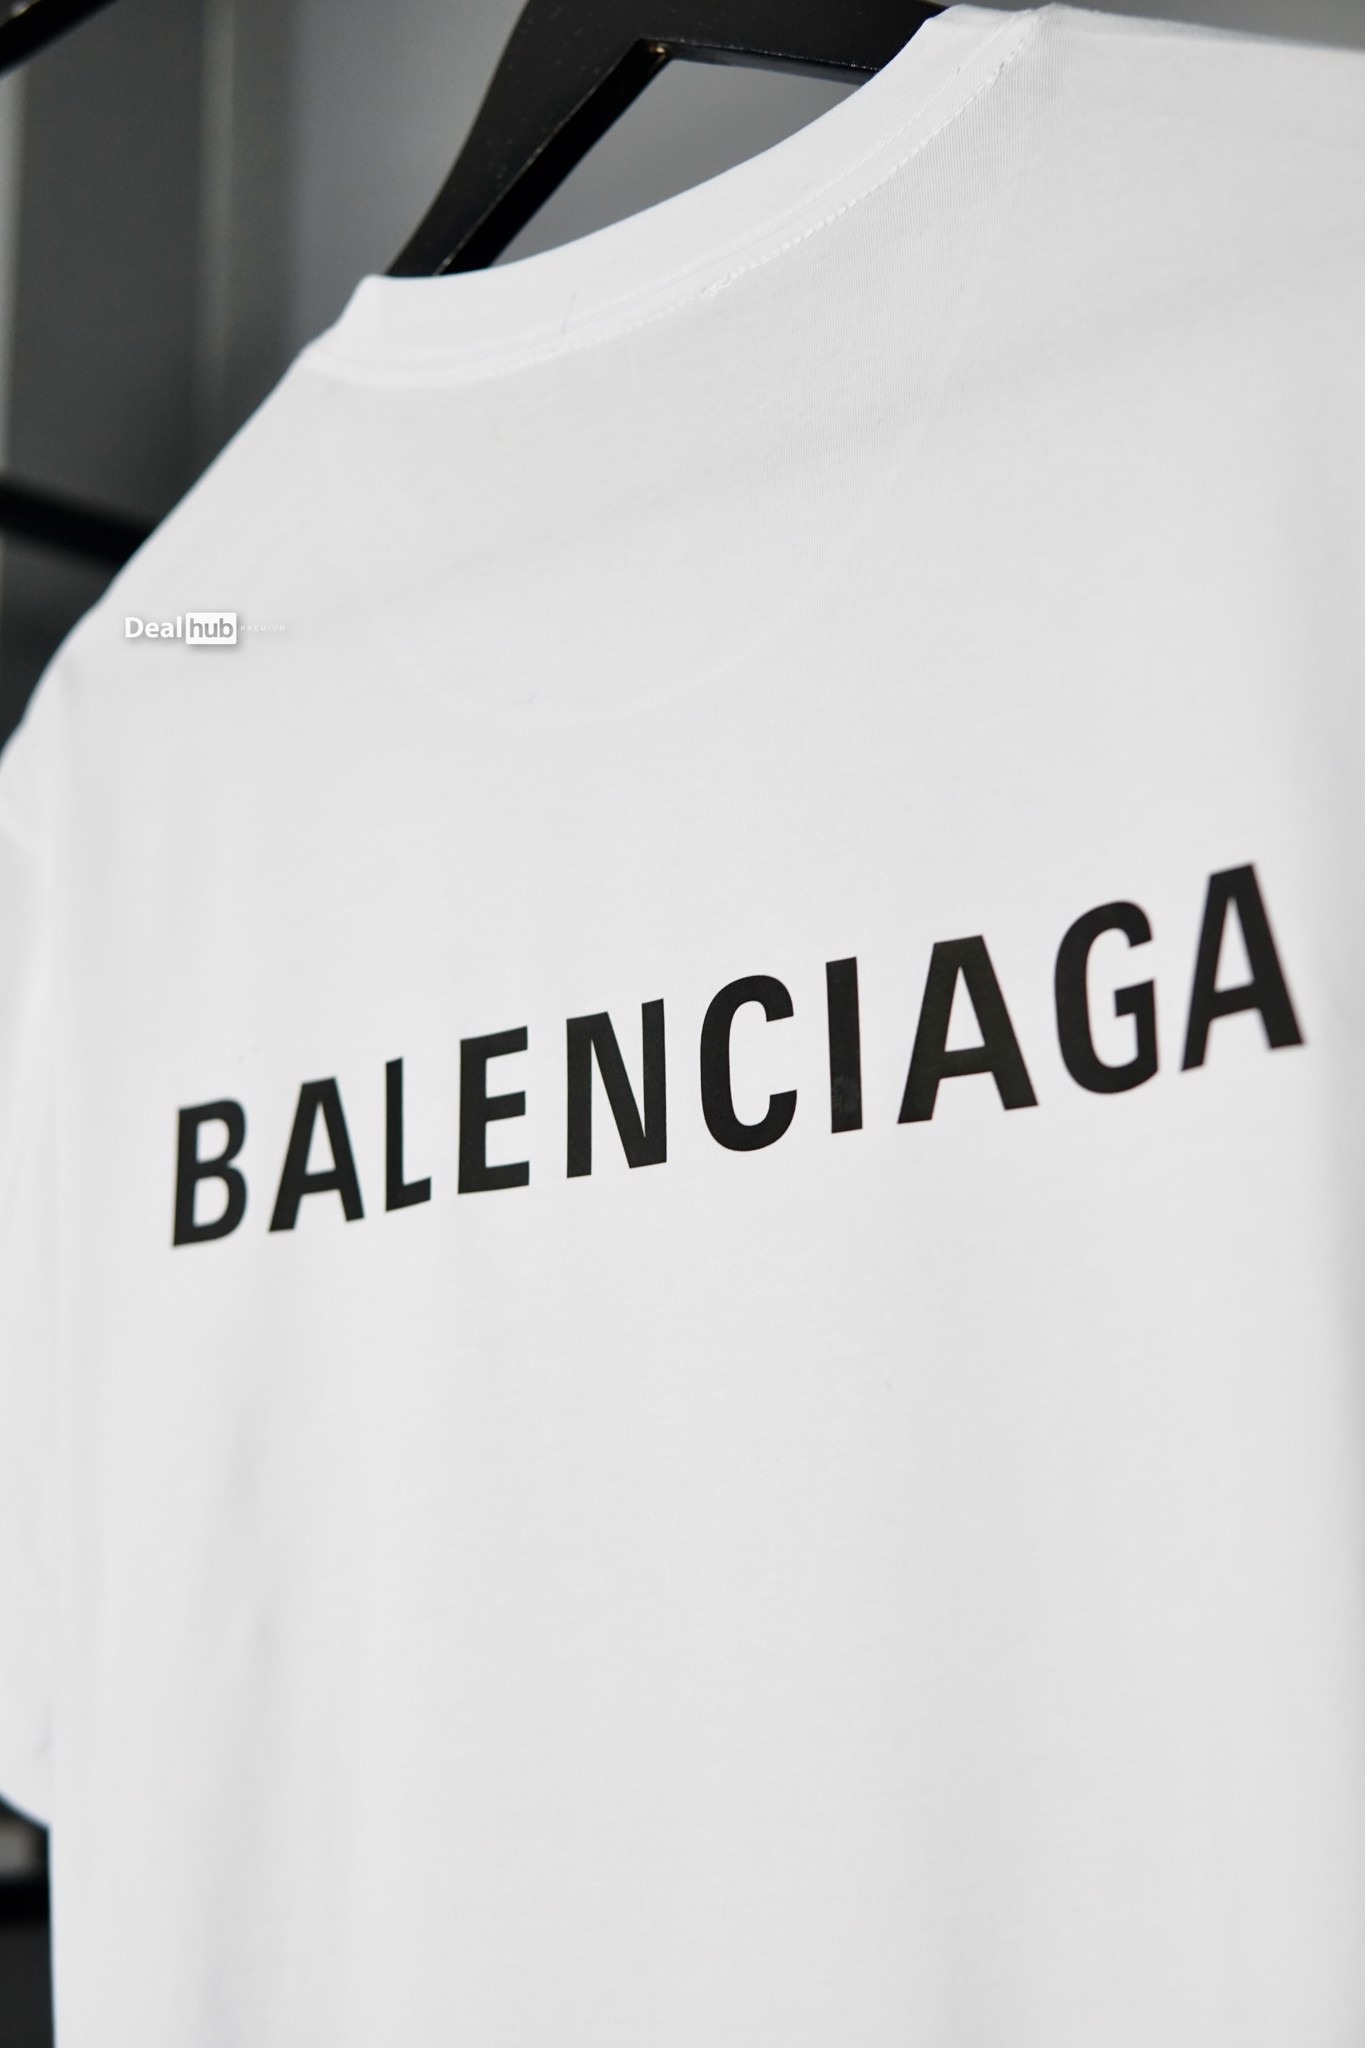 Tổng hợp 53 về logo balenciaga paris hay nhất  cdgdbentreeduvn